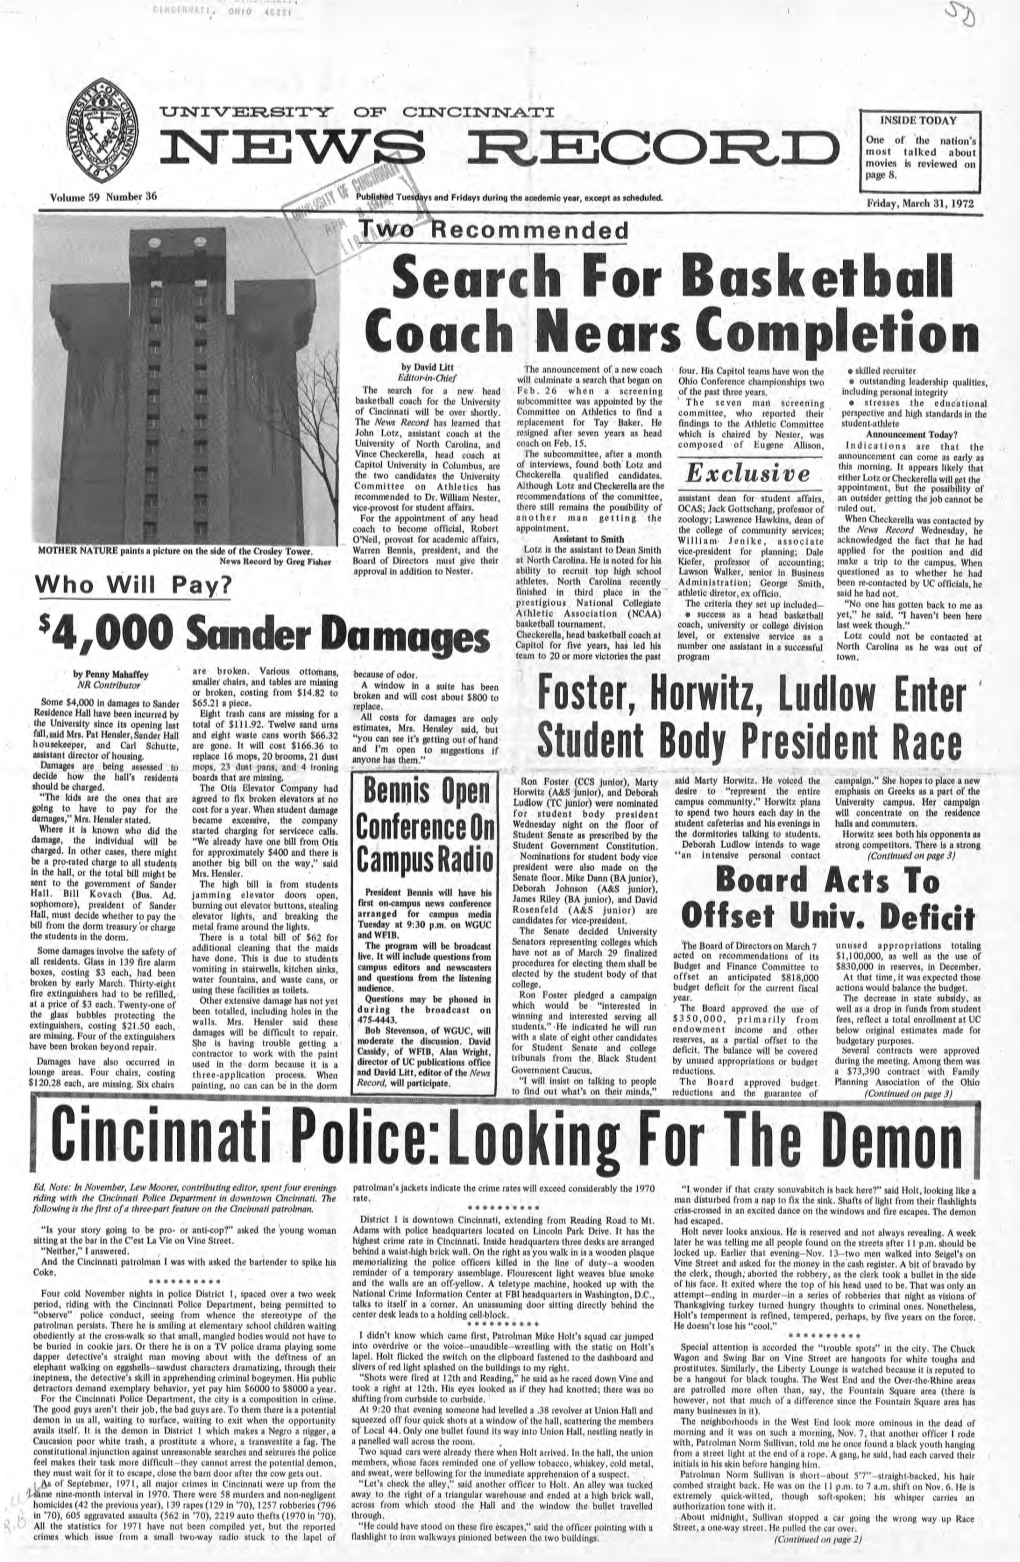 University of Cincinnati News Record. Friday, March 31, 1972. Vol. 59, No